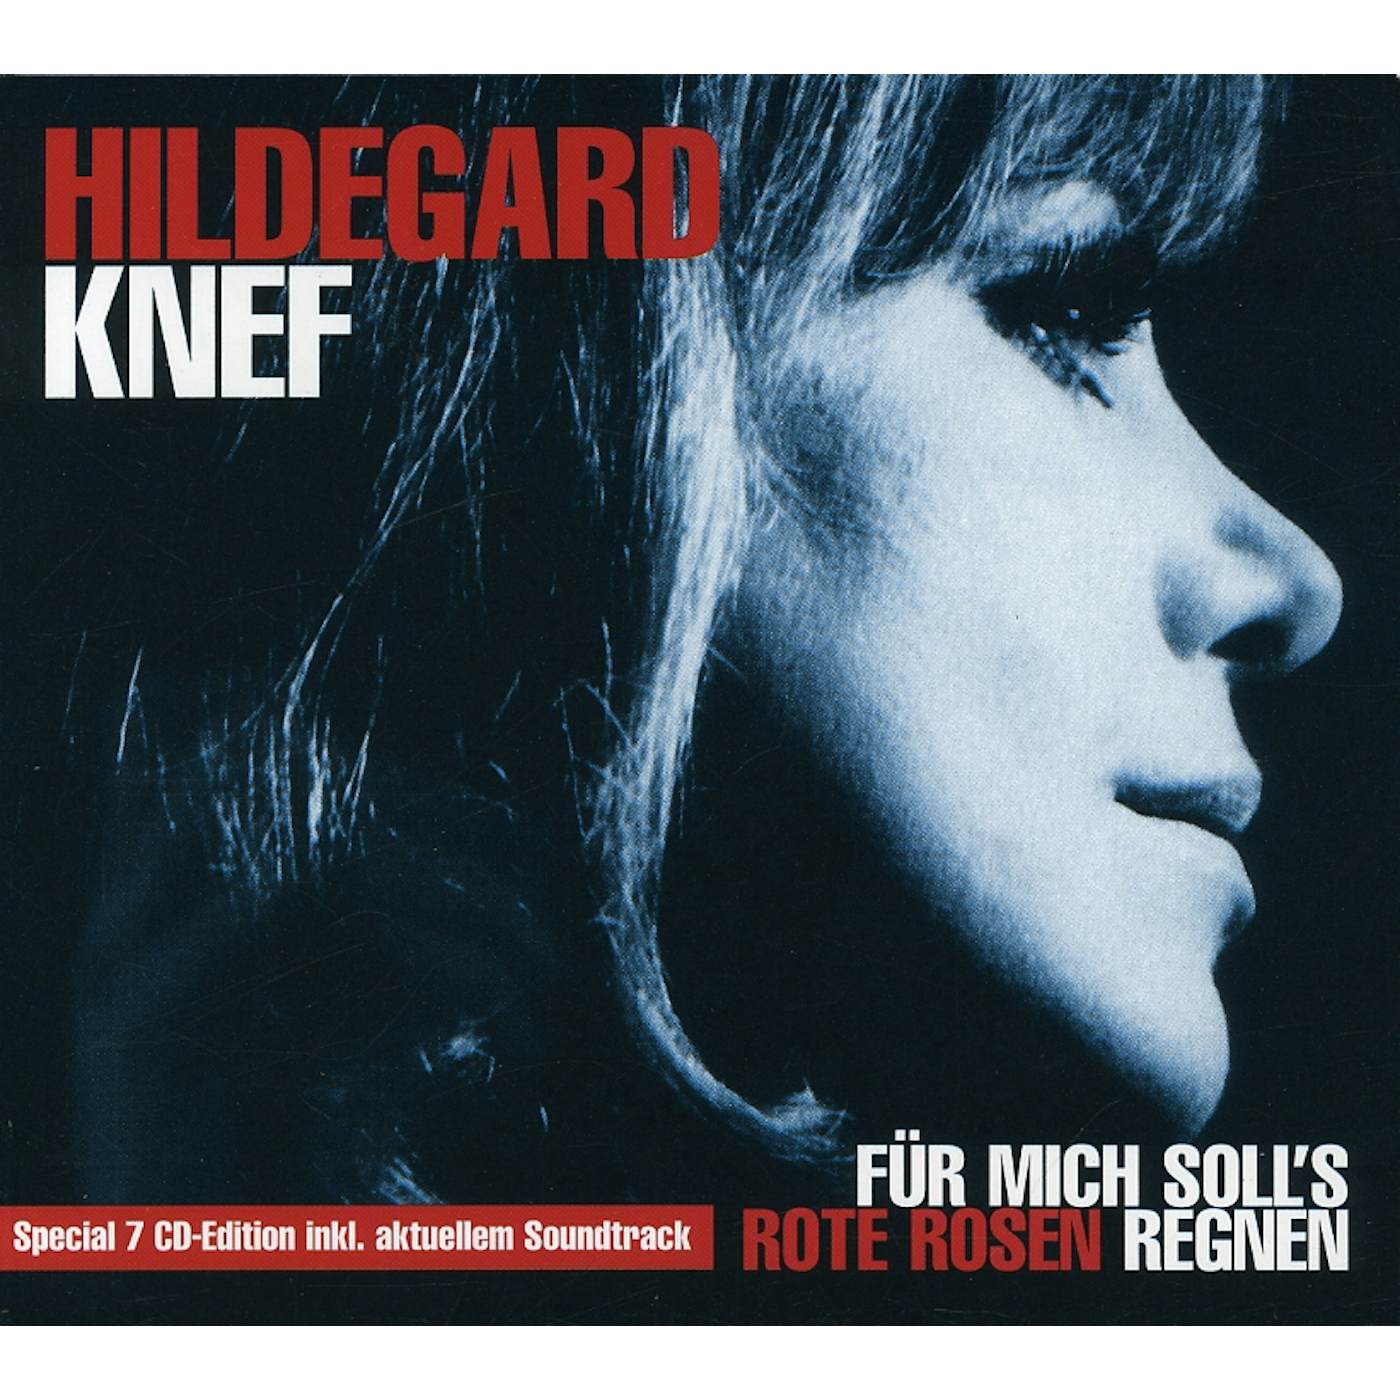 Hildegard Knef FUR MICH SOLL'S ROTE ROSEN RENGEN CD